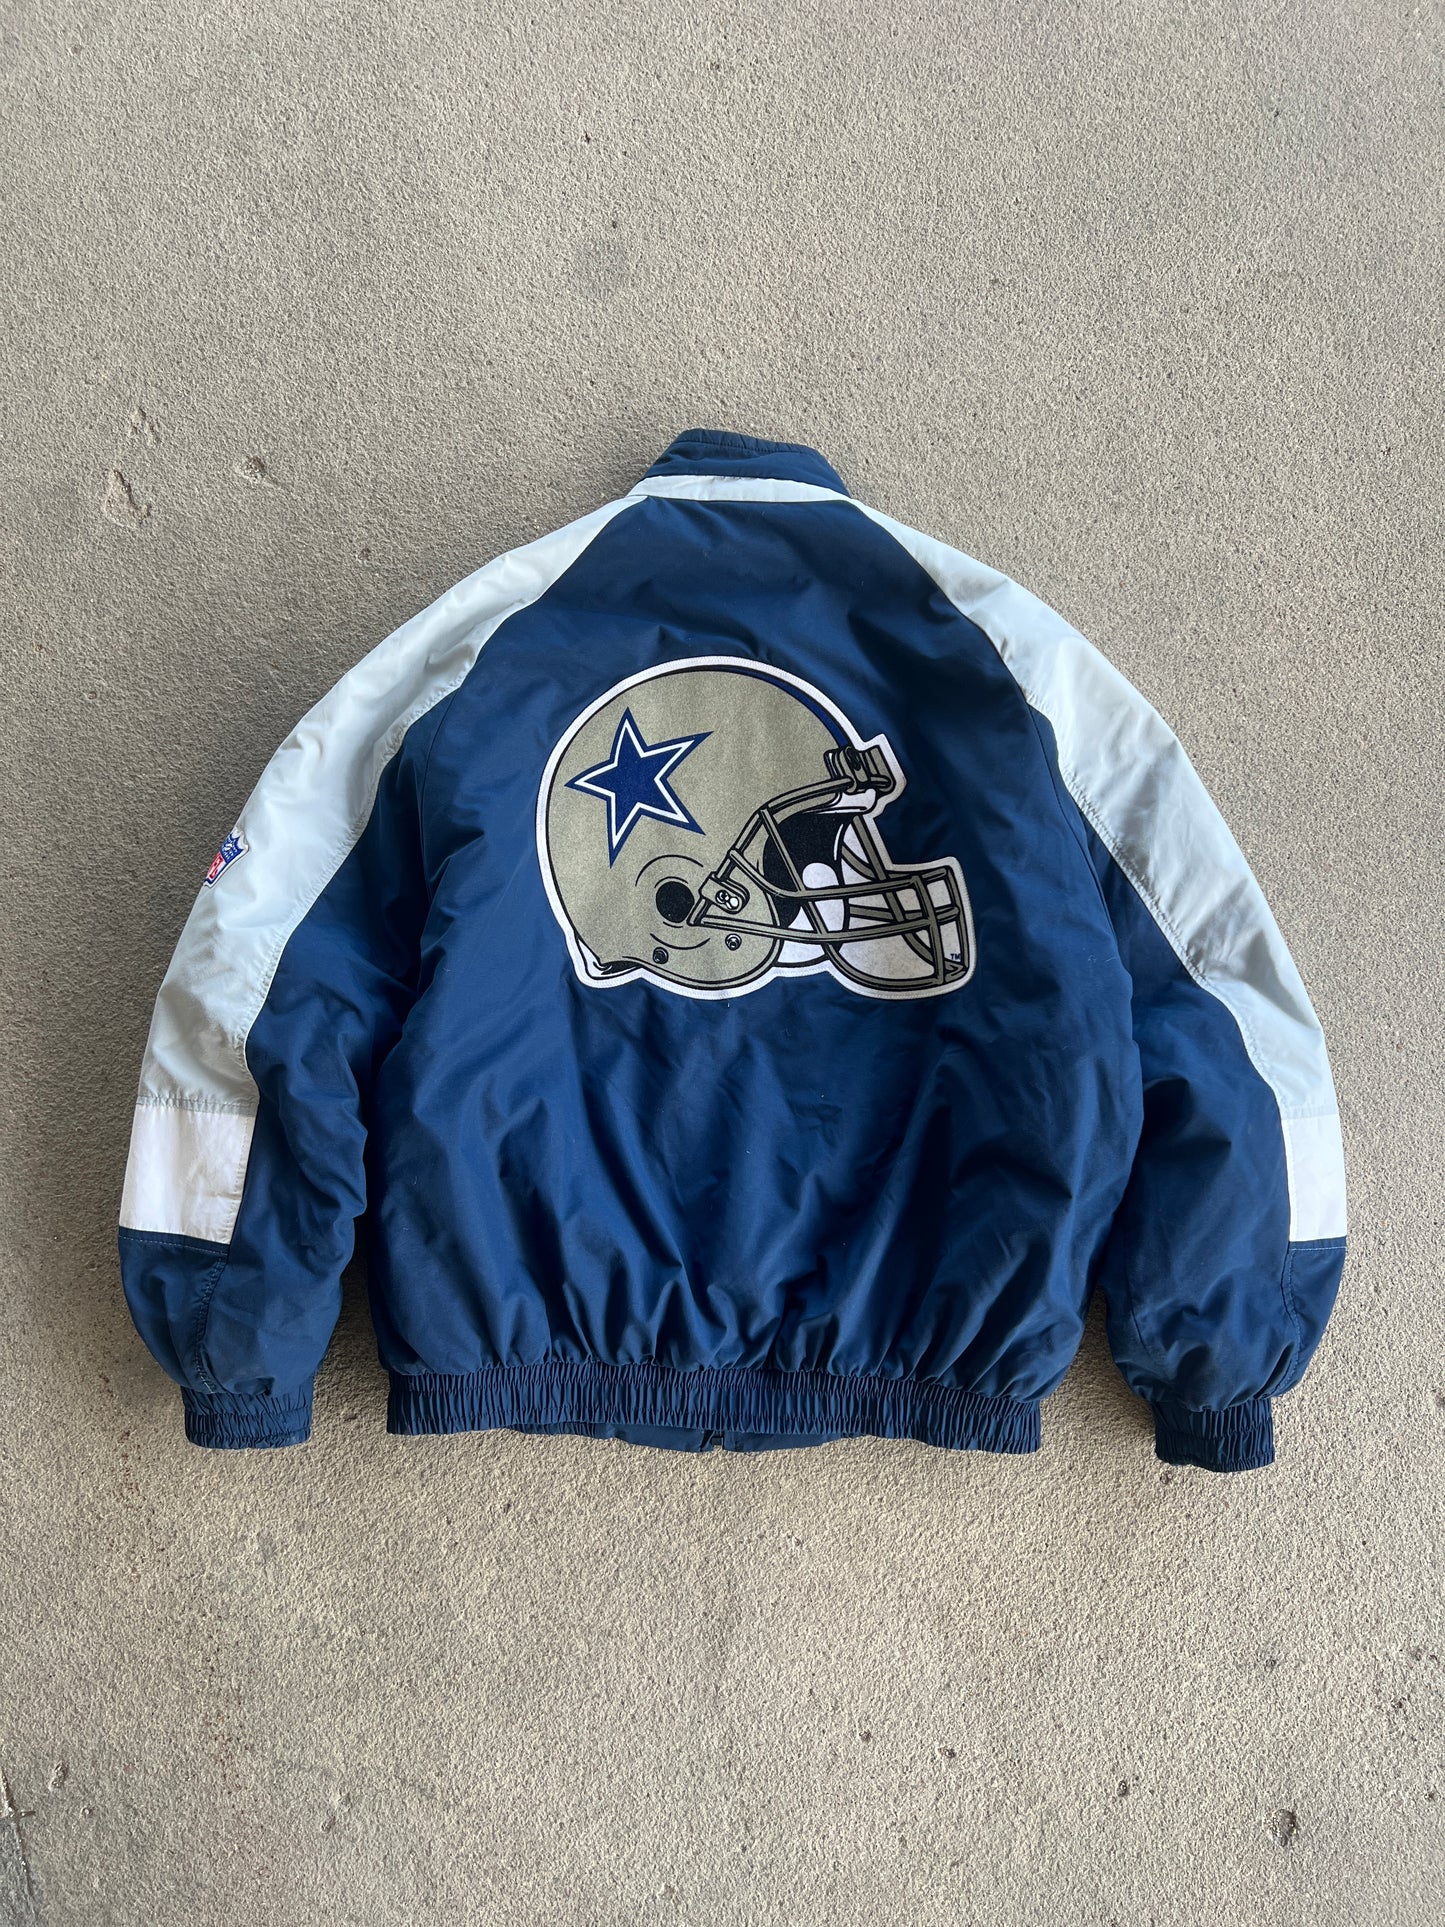 Vintage Dallas Cowboys Starter Jacket - L